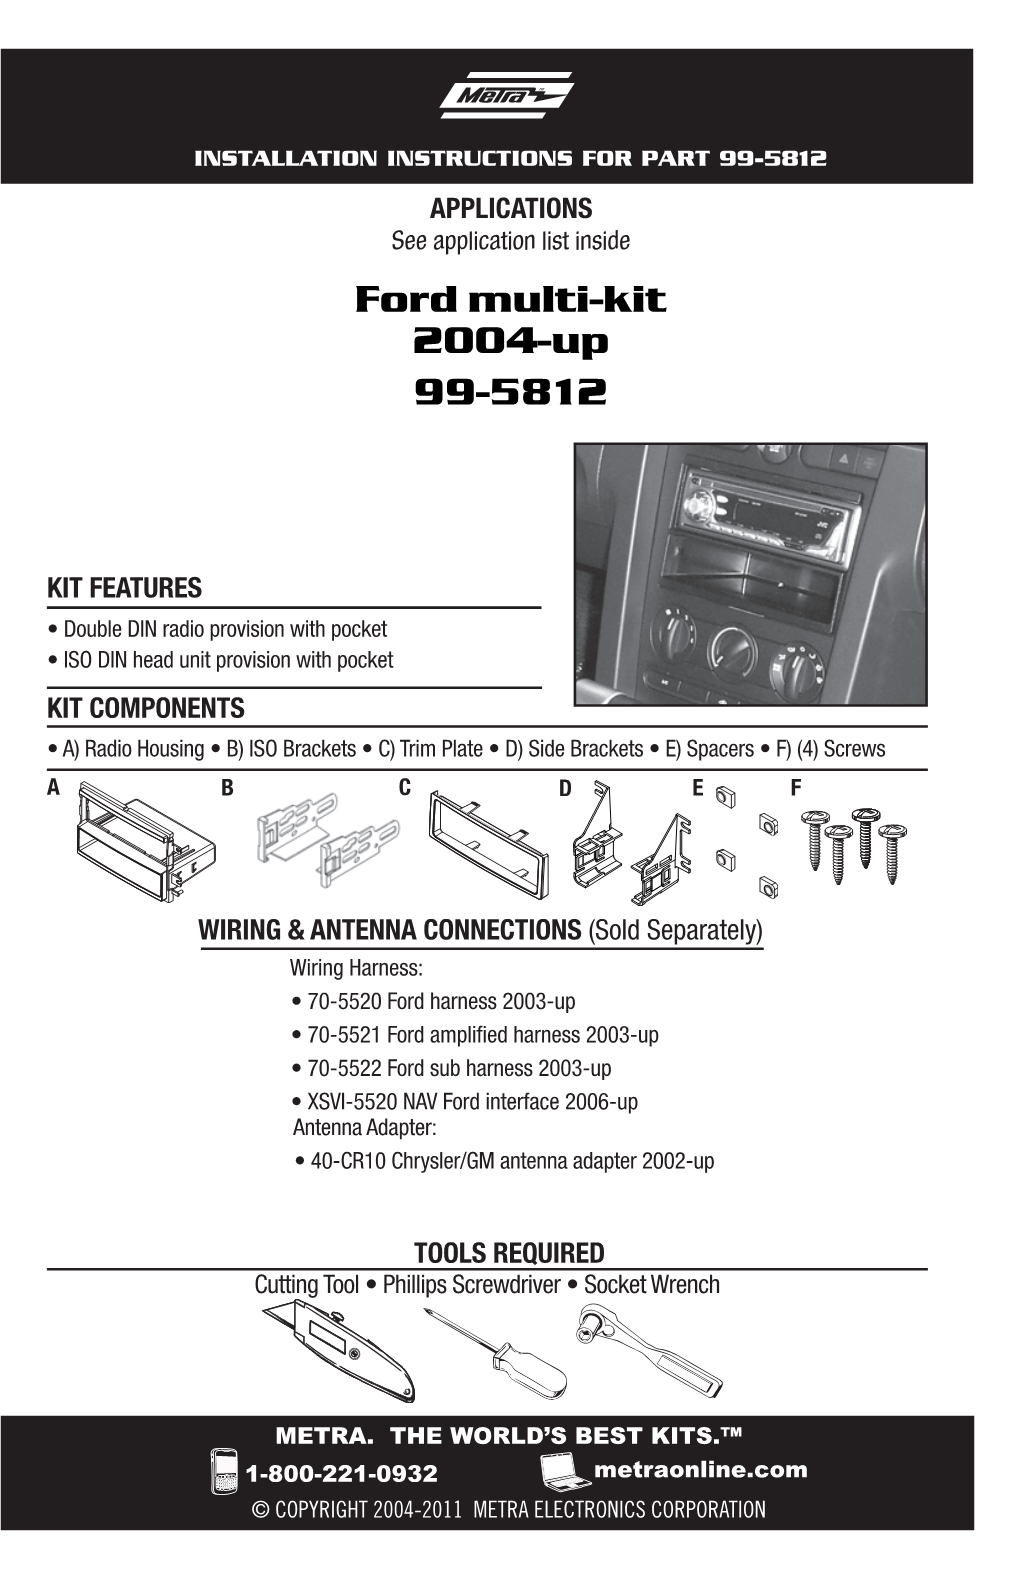 Ford Multi-Kit 2004-Up 99-5812